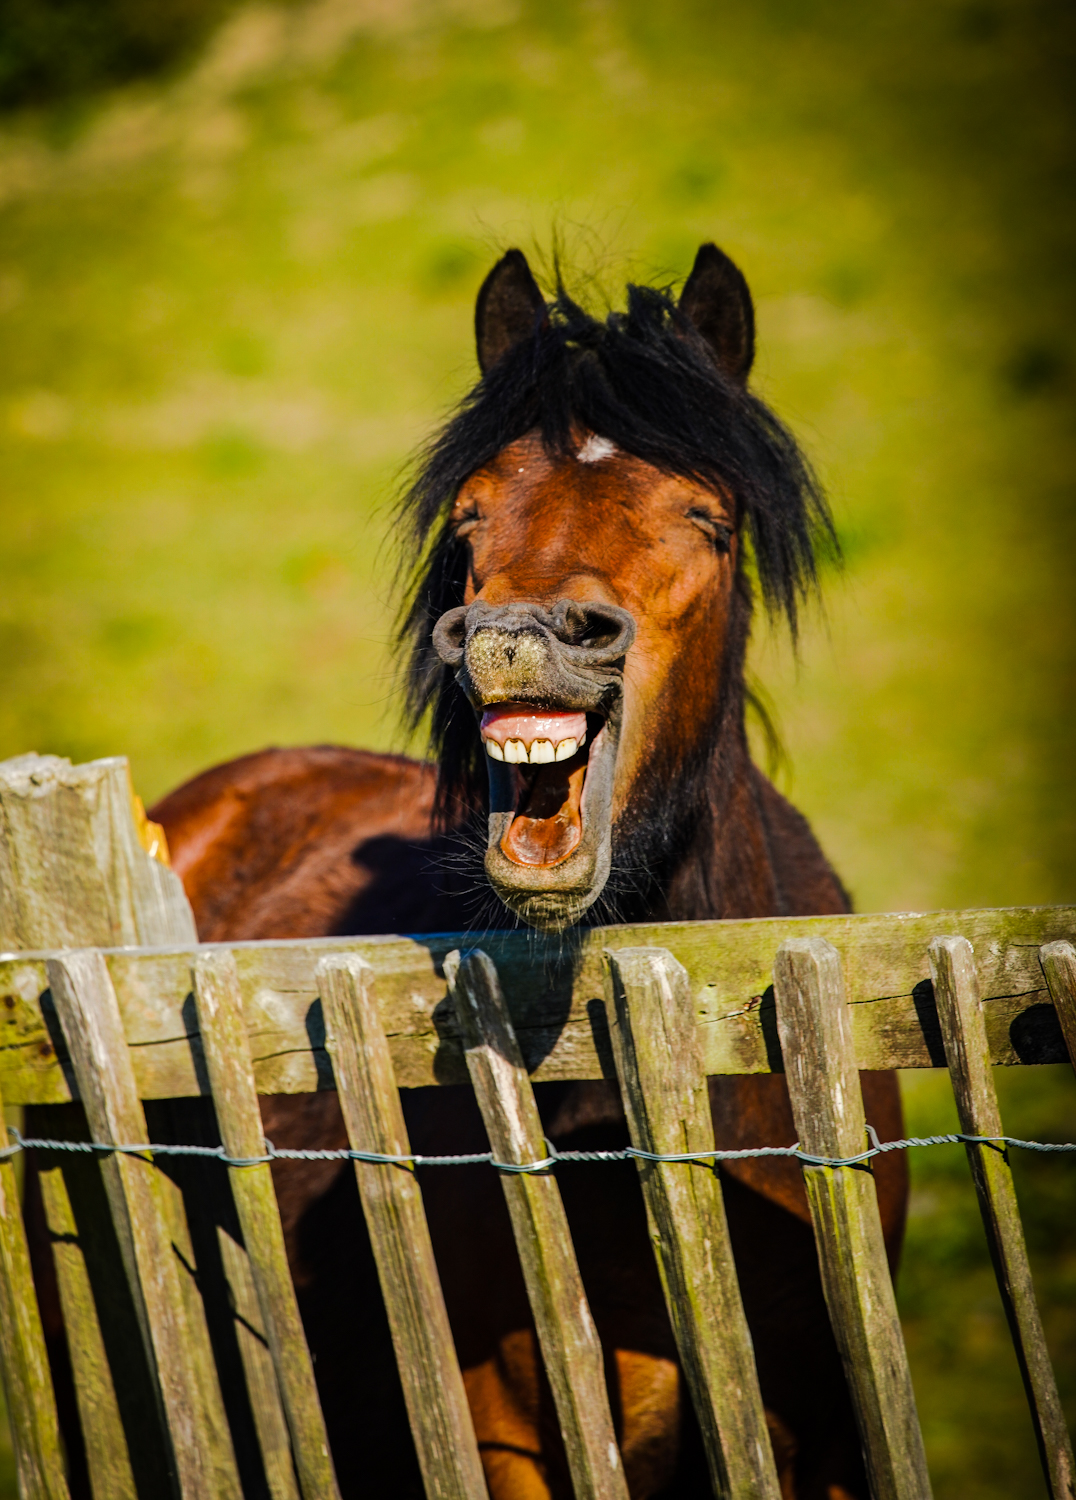 Fotografija 'Crazy horse' fotografa Daniela Szumilasa snimljena u Yorkshireu.